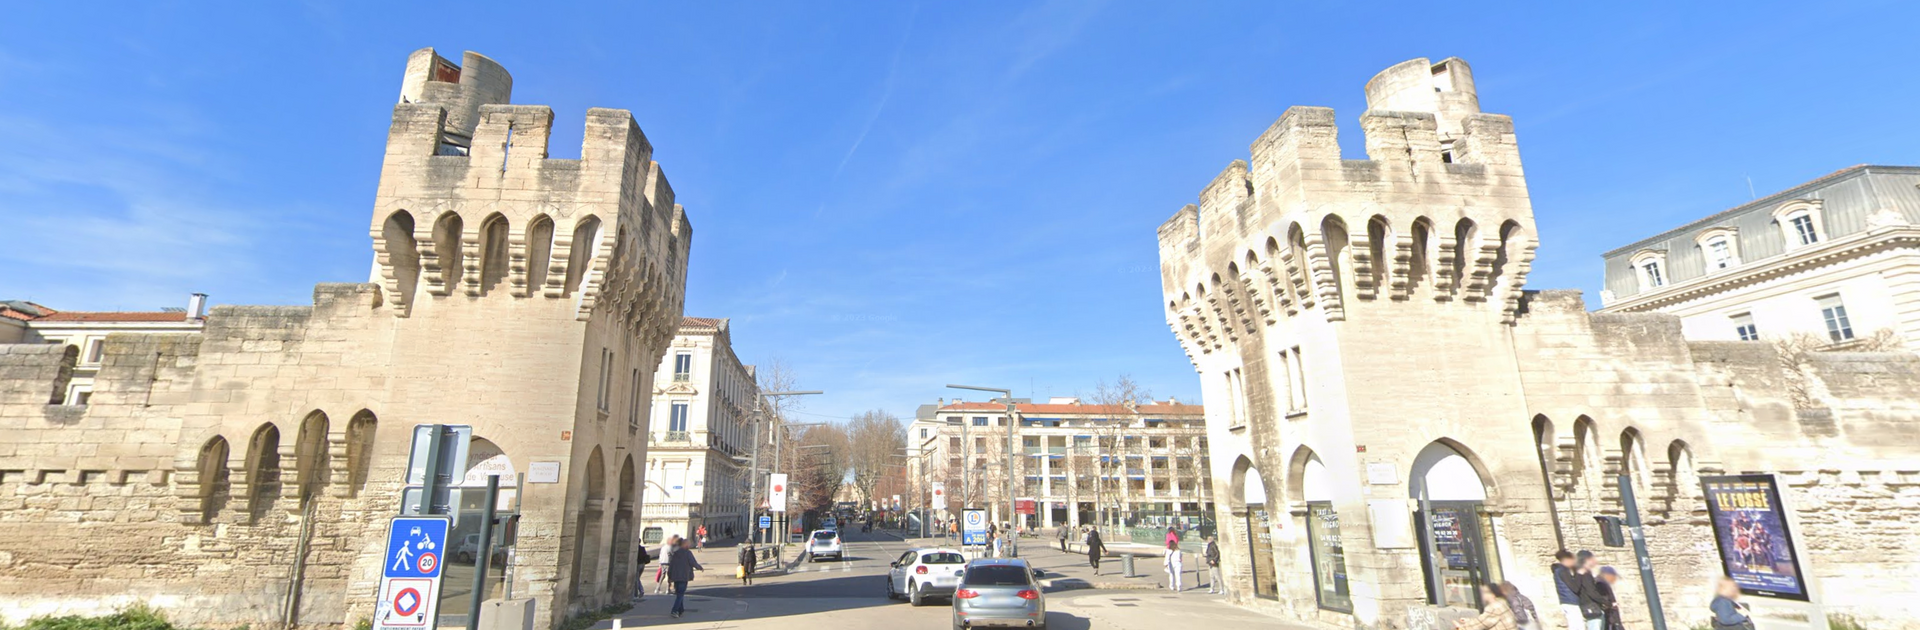 Remparts d'Avignon by Google Earth